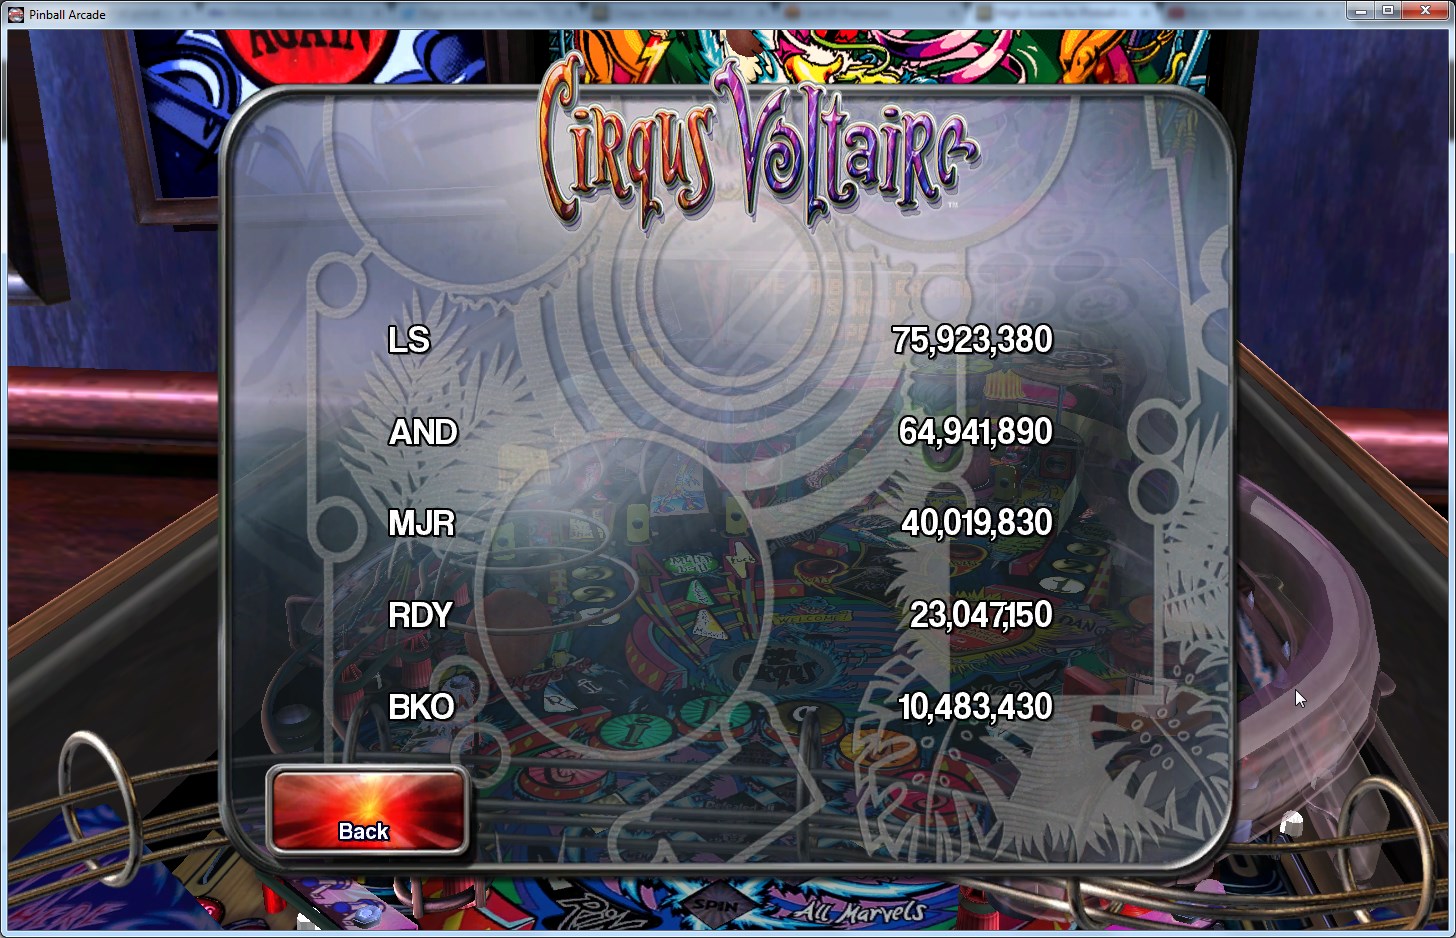 Jigg: Pinball Arcade: Circus Voltaire (PC) 64,941,890 points on 2014-12-22 03:16:27